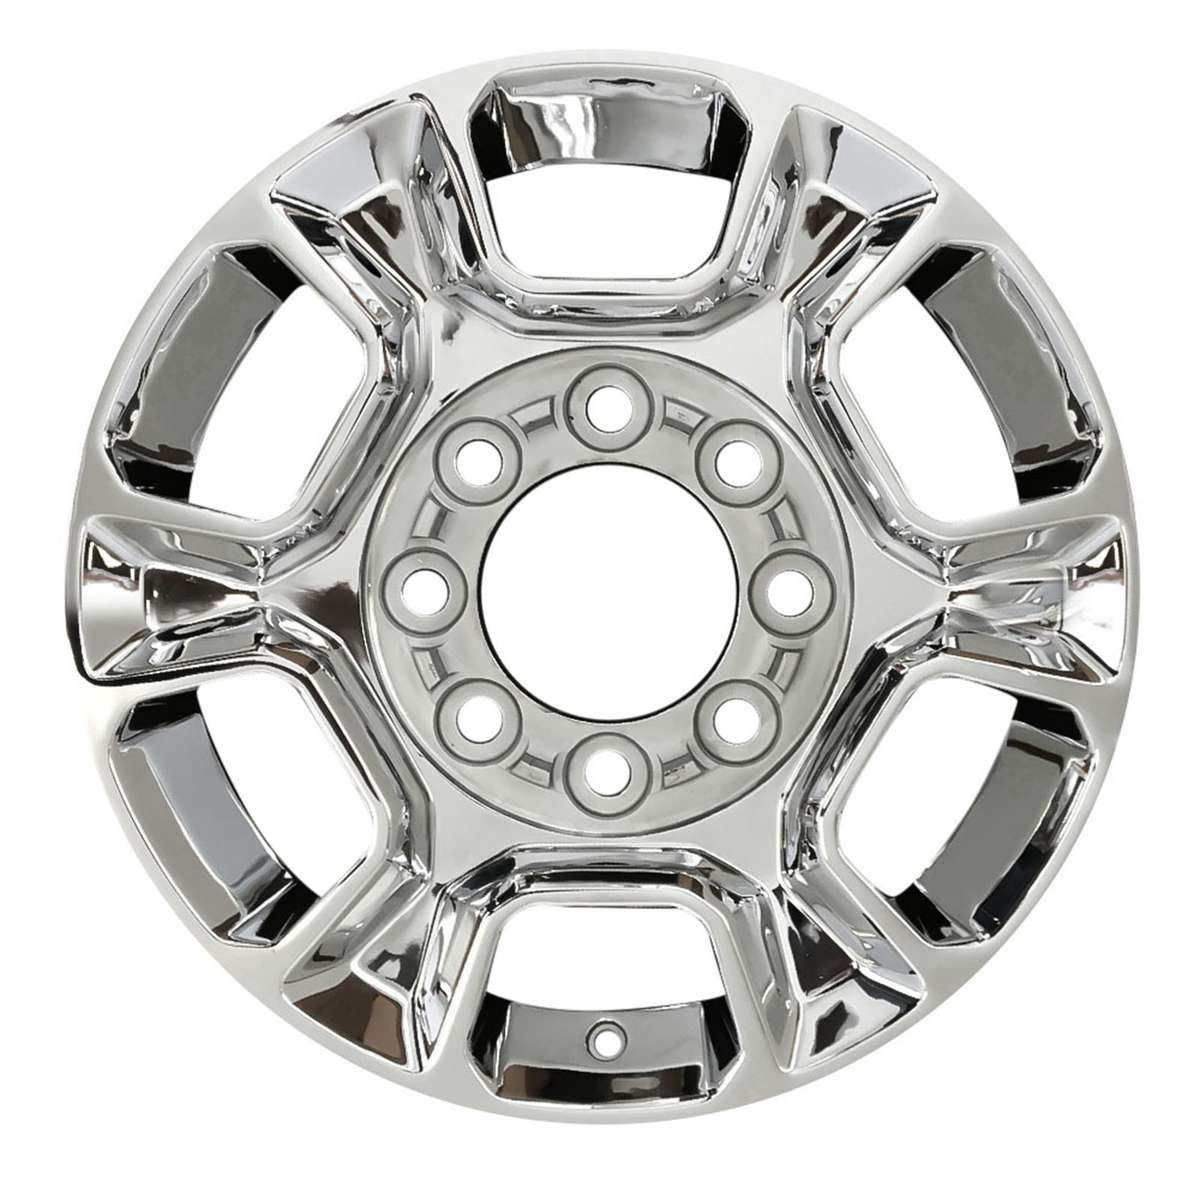 2015 GMC Sierra 2500 18" OEM Wheel Rim W97376CHR